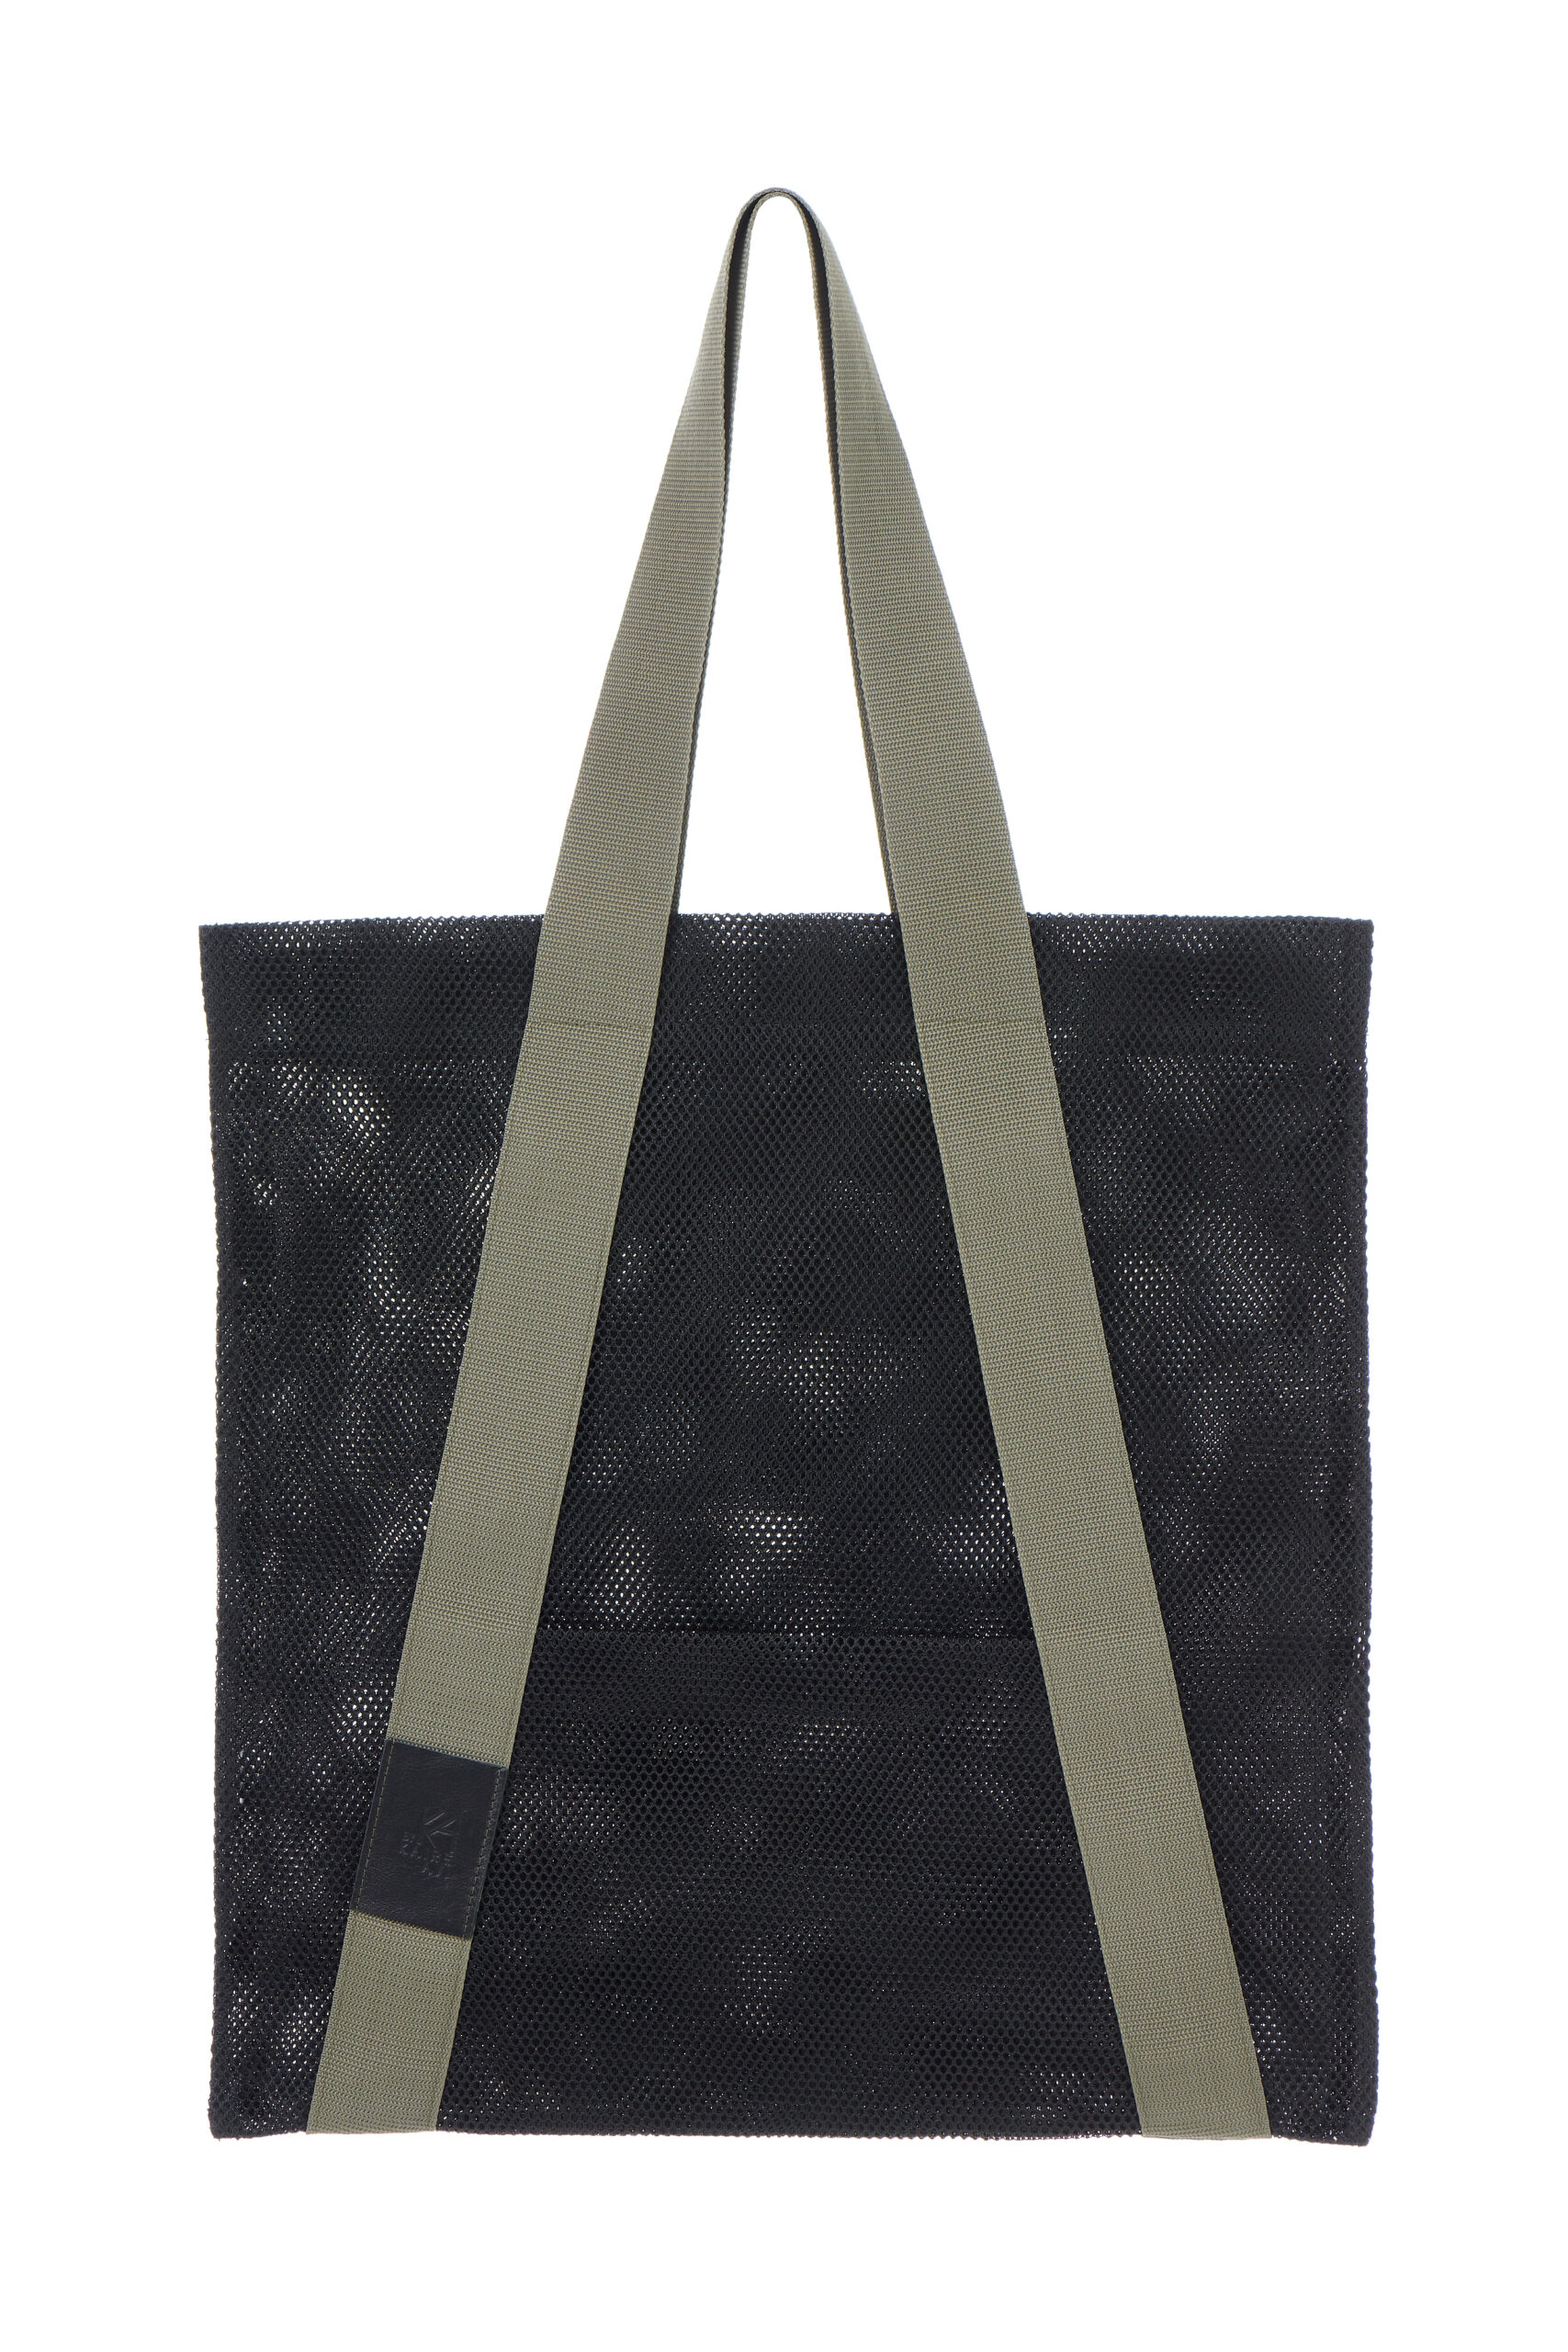 Poekott “Hanna” roheline rihm / Tote bag “Hanna ” black, khaki straps